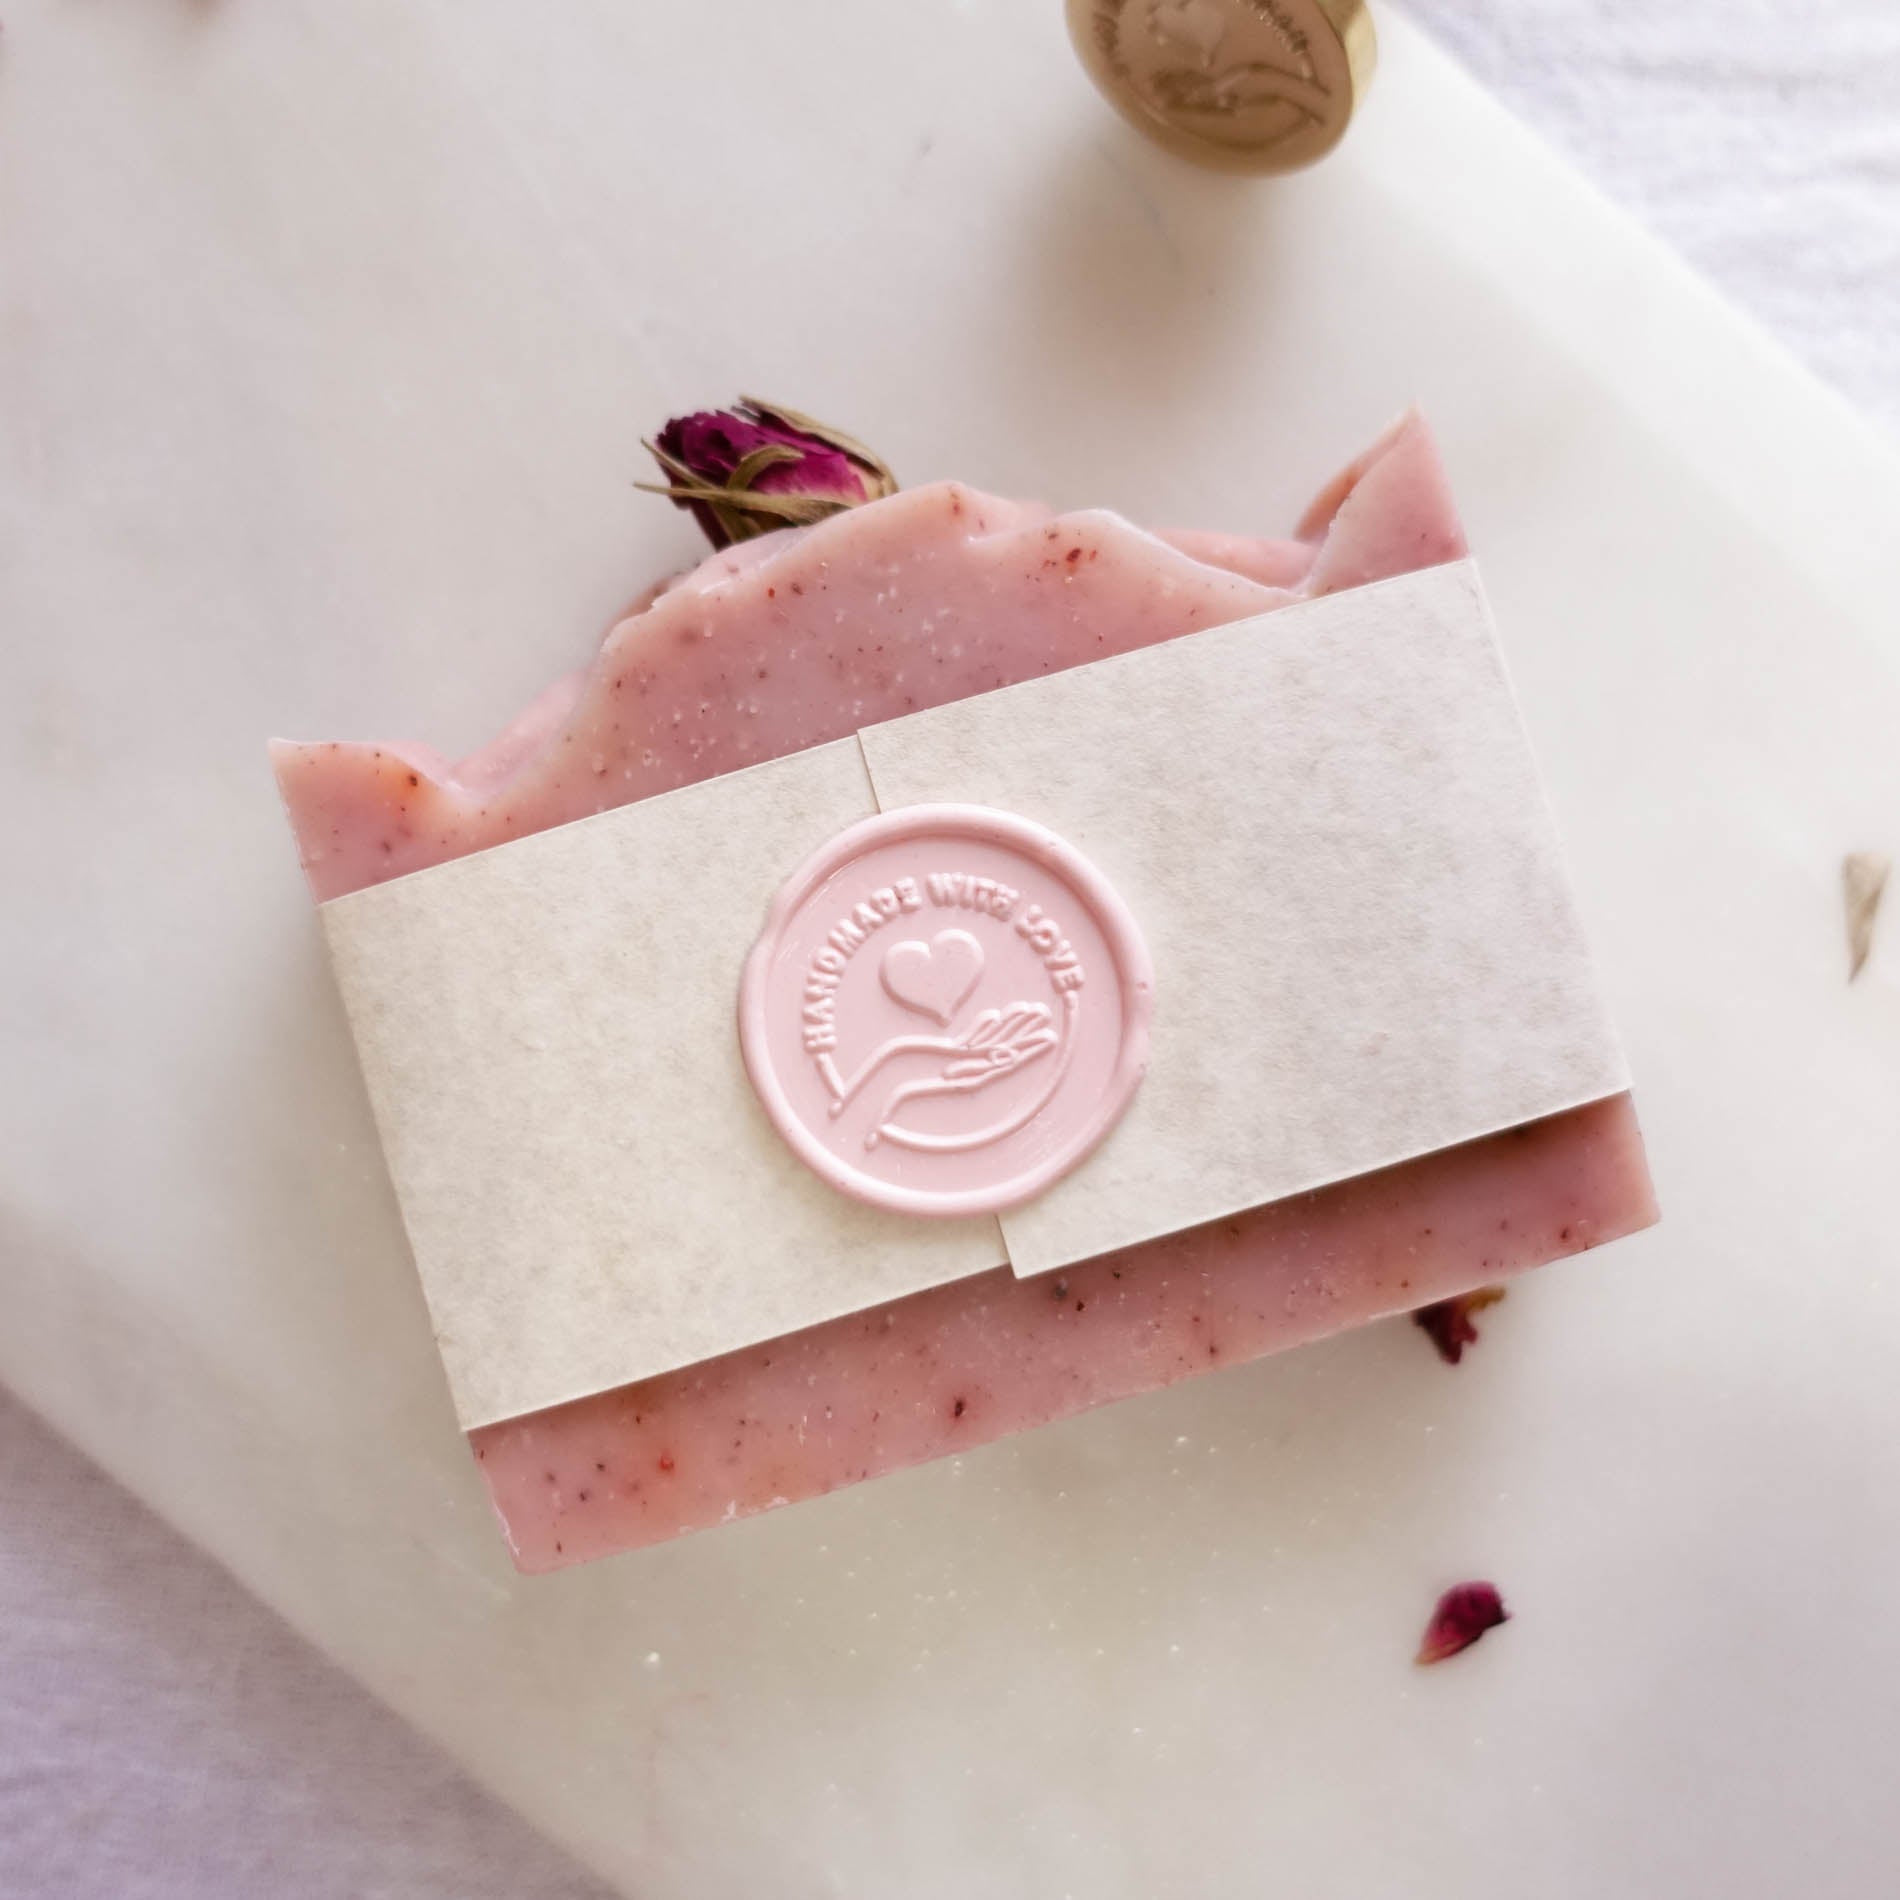 Handmade with Love wax seal on soap packaging idea australia fiona ariva